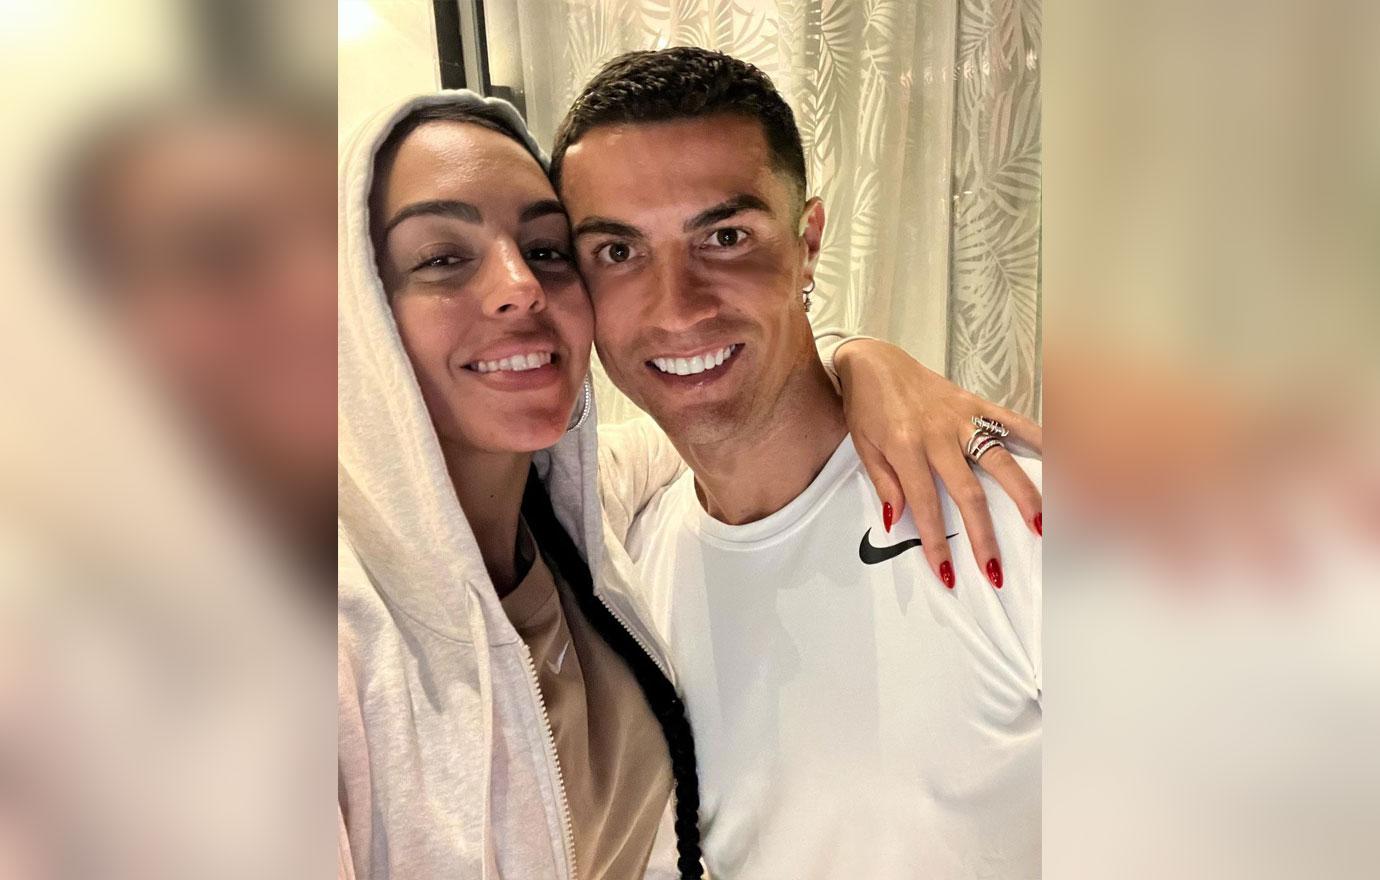 Cristiano Ronaldo and Georgina Rodriguez cosy up in a sweet snap